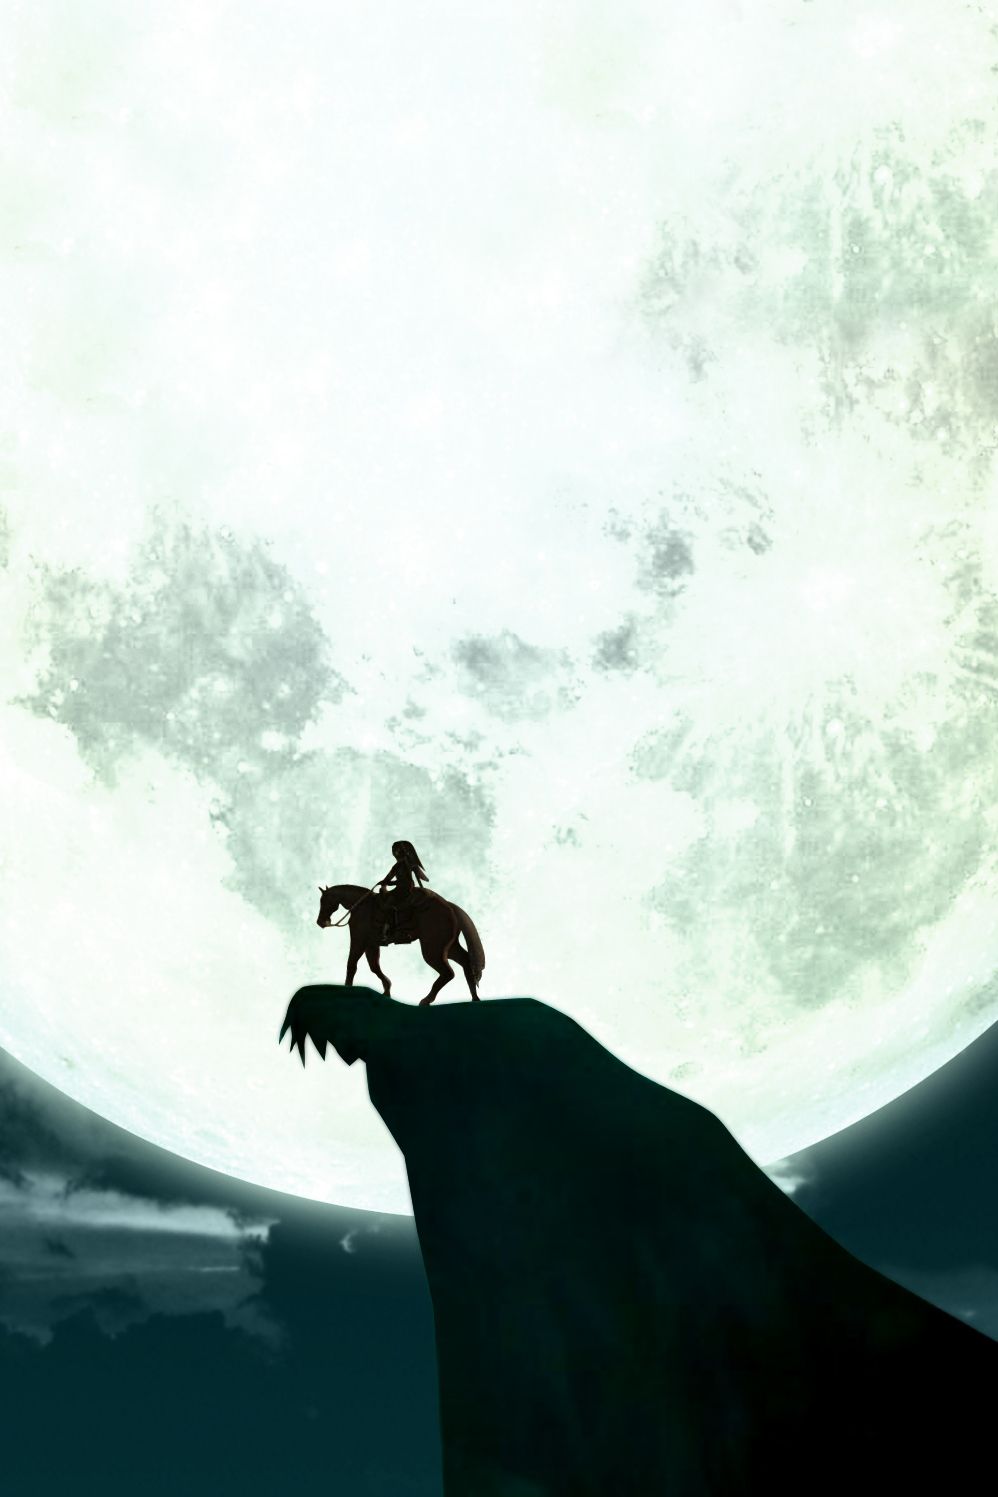 zelda-horse-silhouette.jpg